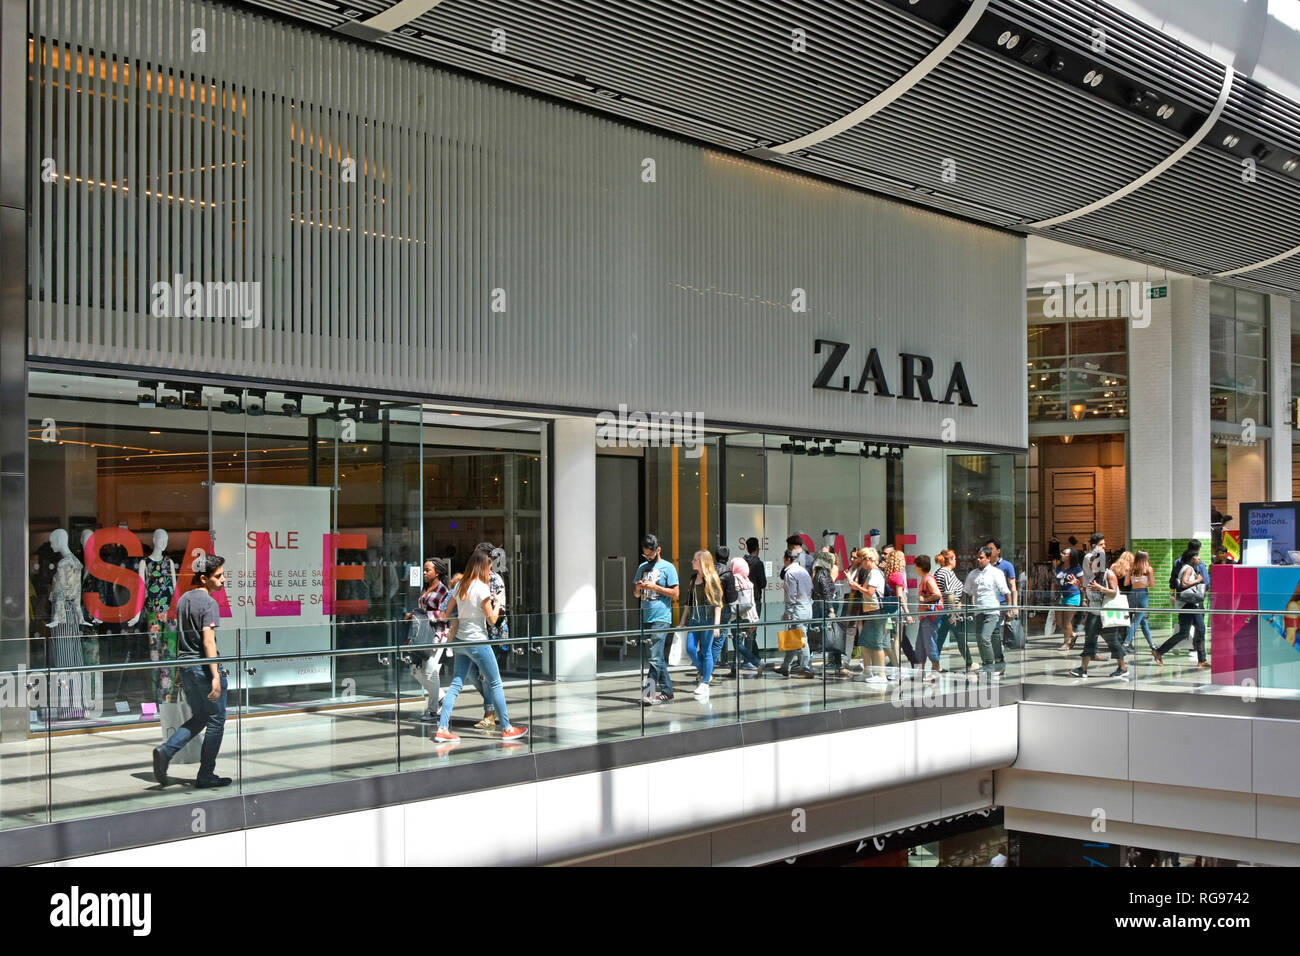 Zara fast fashion shop front window 